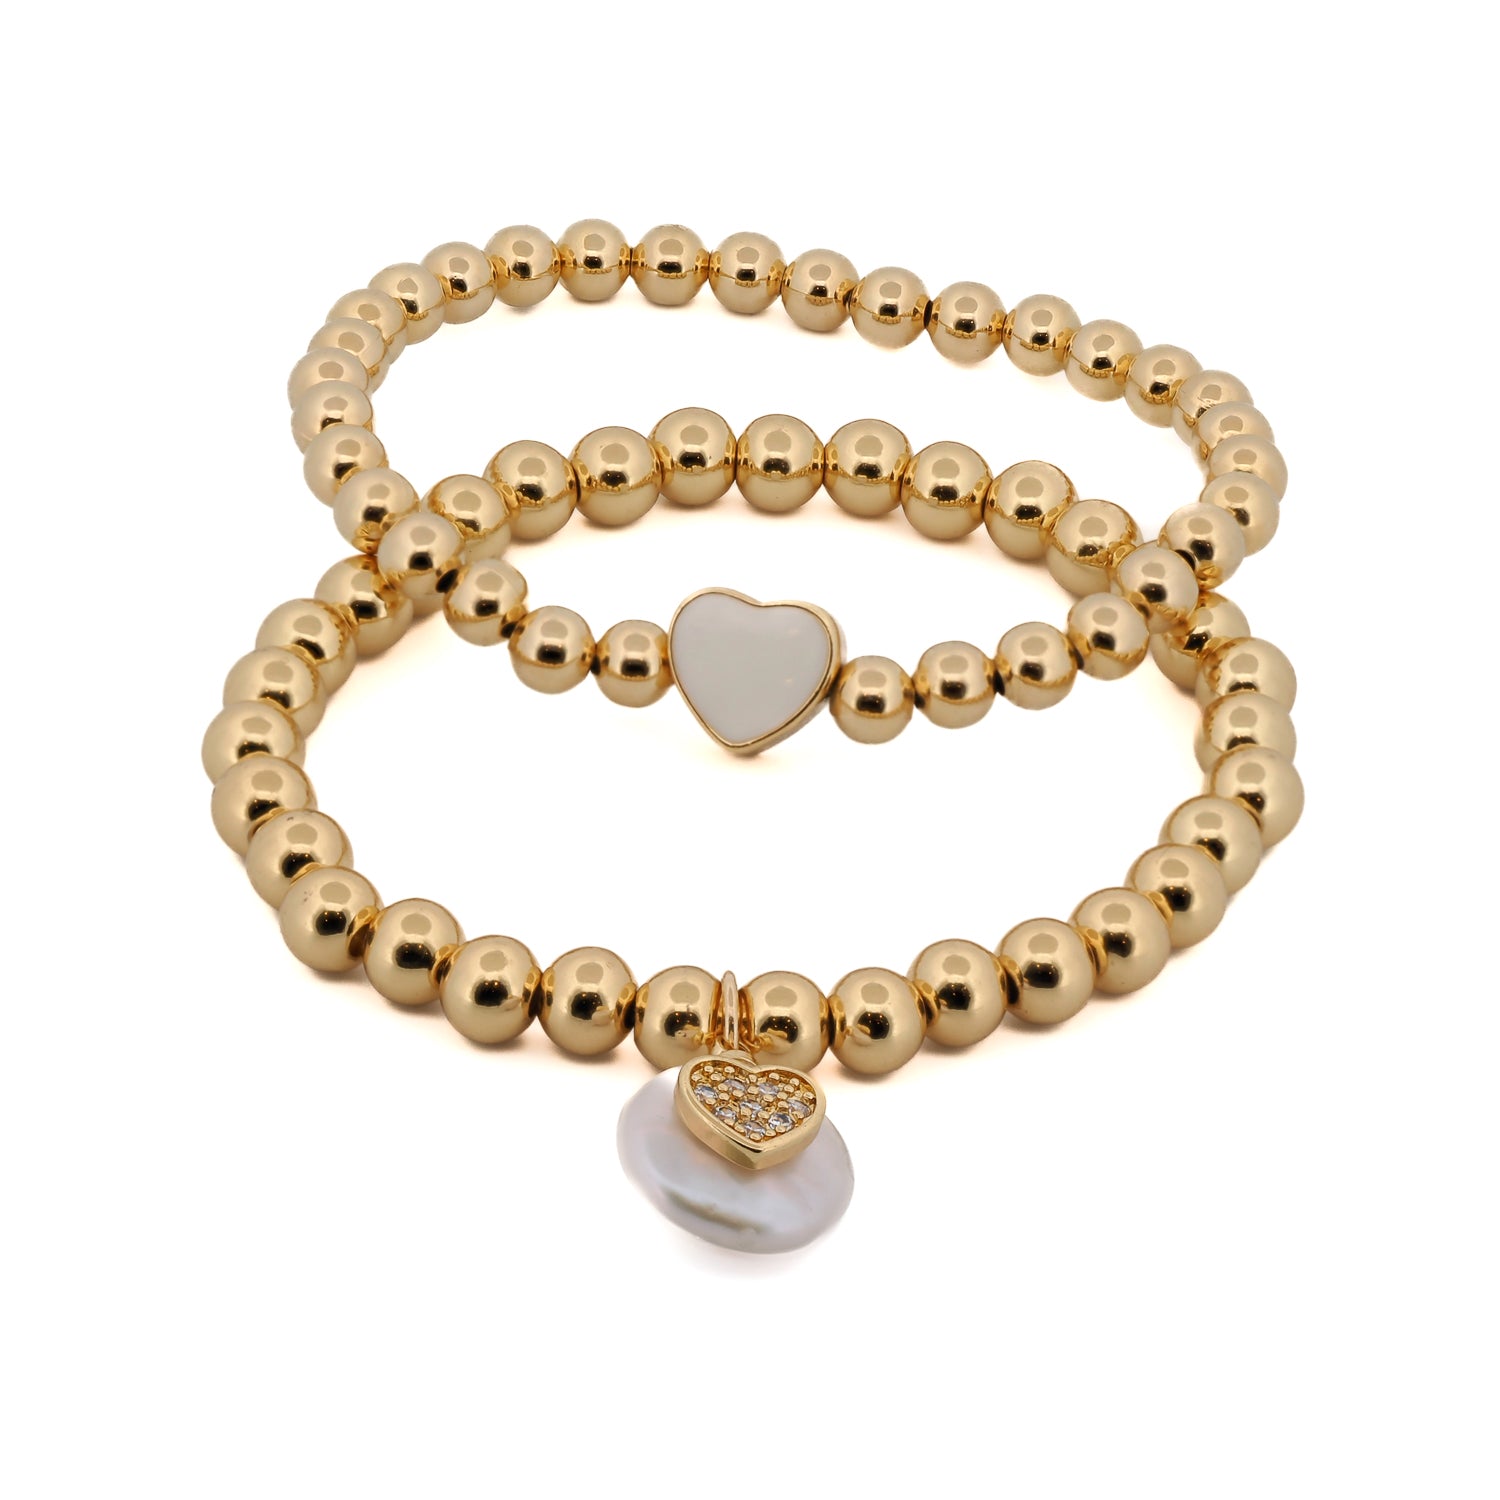 Enduring Symbol: Gold and Enamel Heart Beads